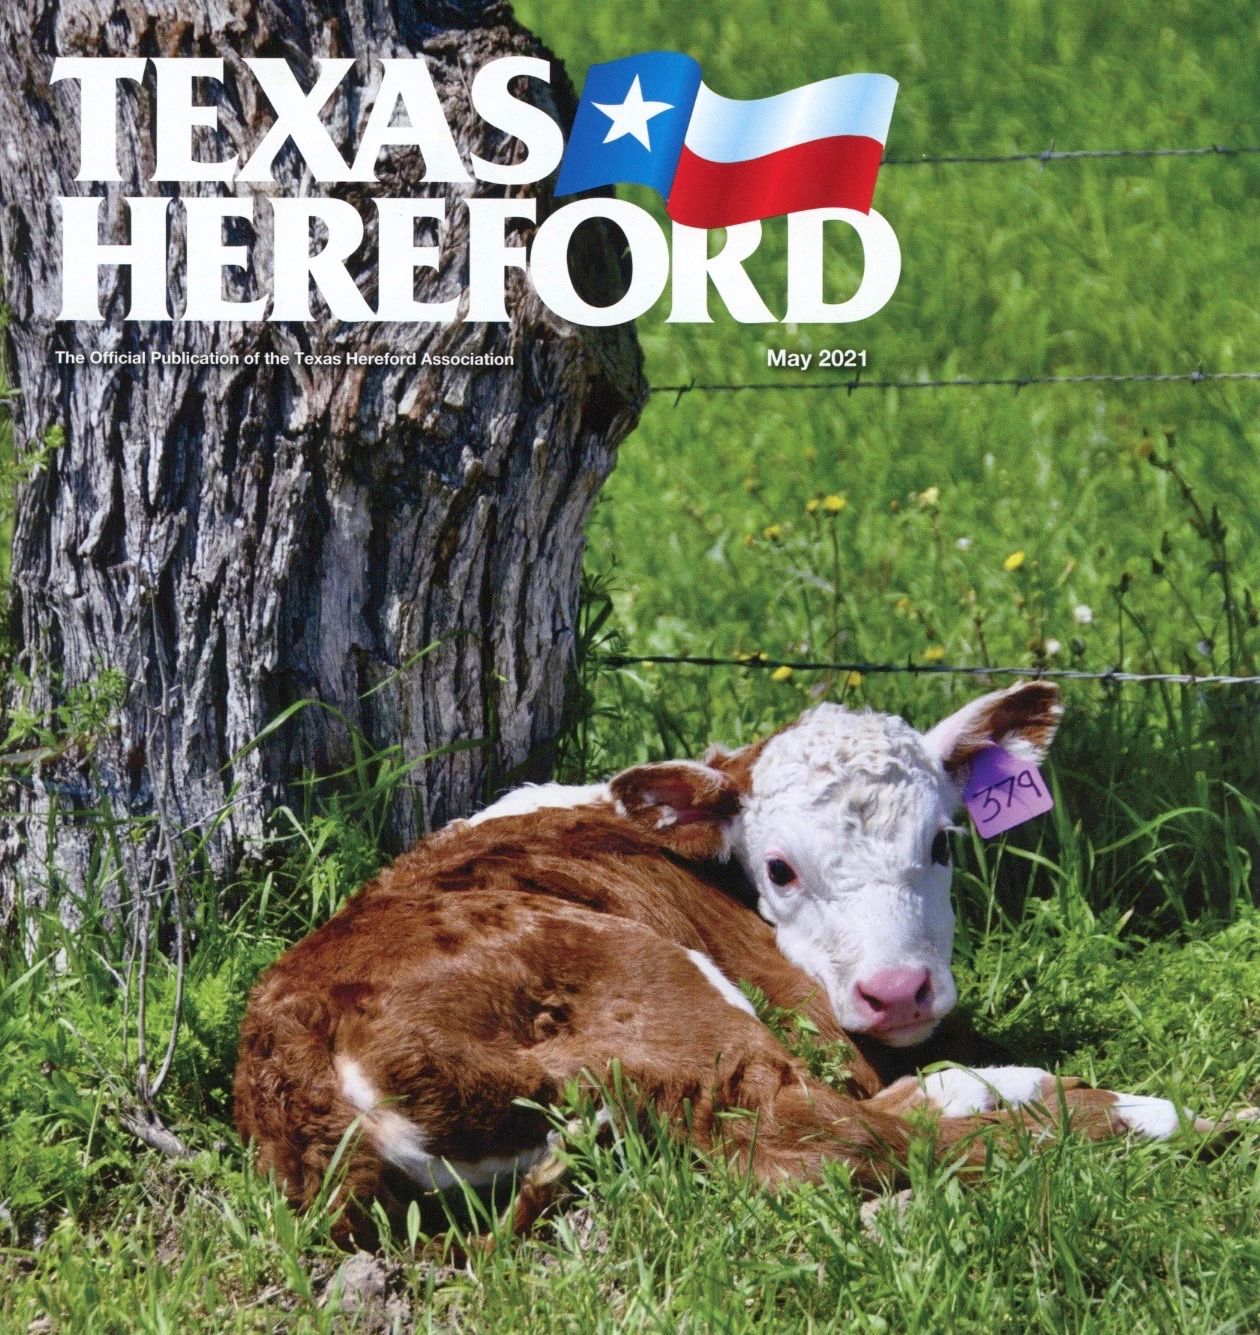 Registered Hereford Bulls Texas 
Herefords For Sale
Redbird Ranch Cattle
Hereford Bulls For Sale